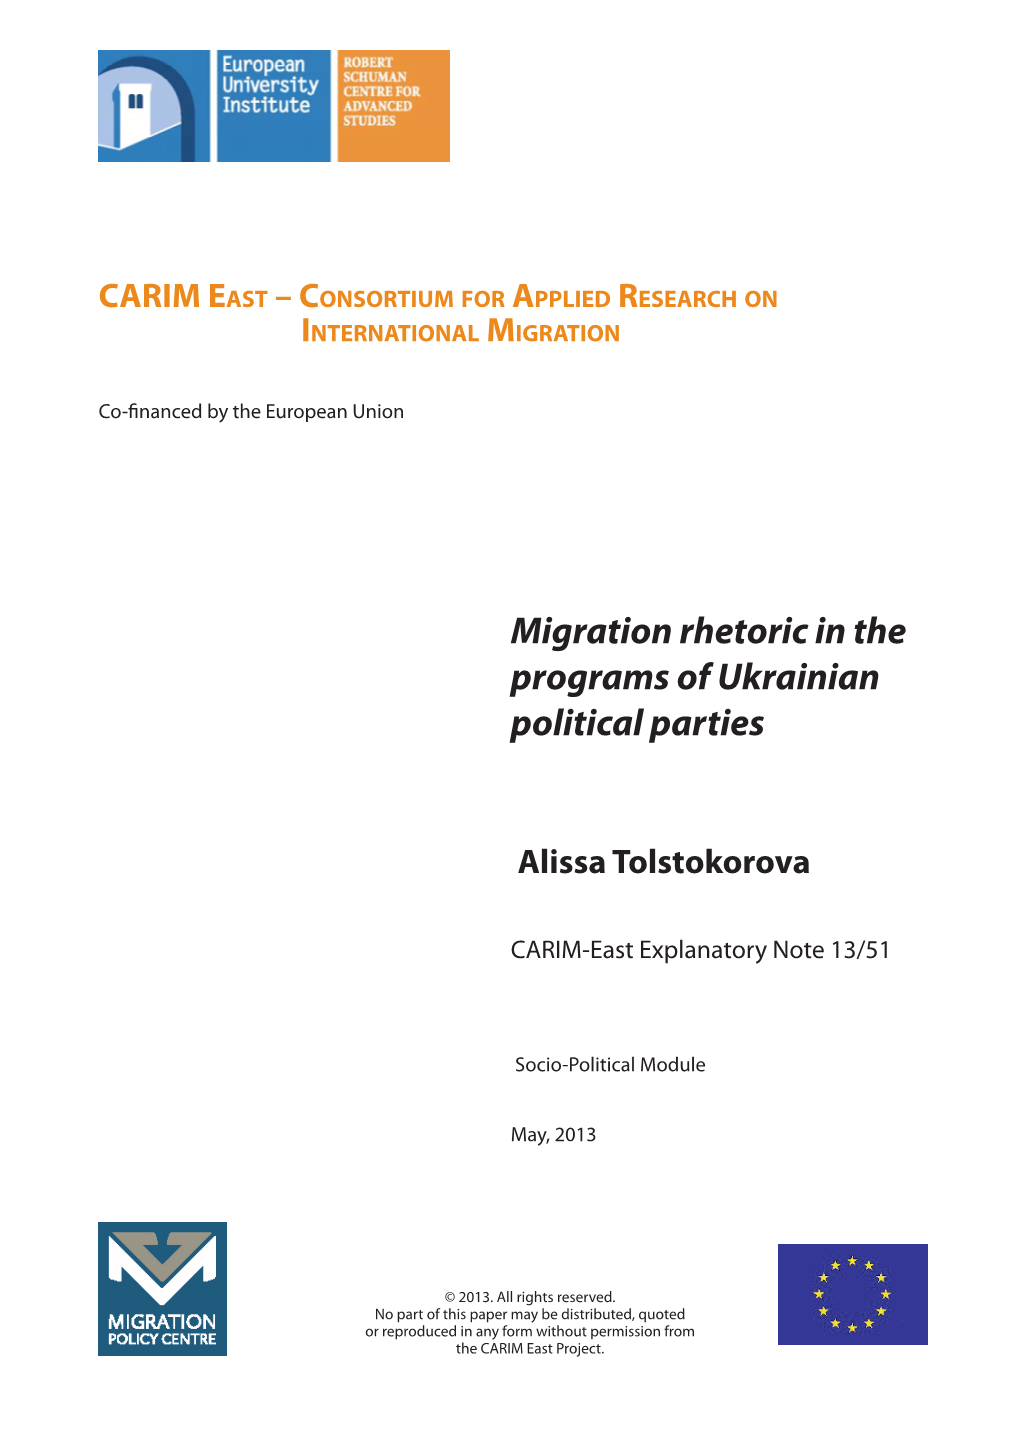 Migration Rhetoric in the Programs of Ukrainian Political Parties